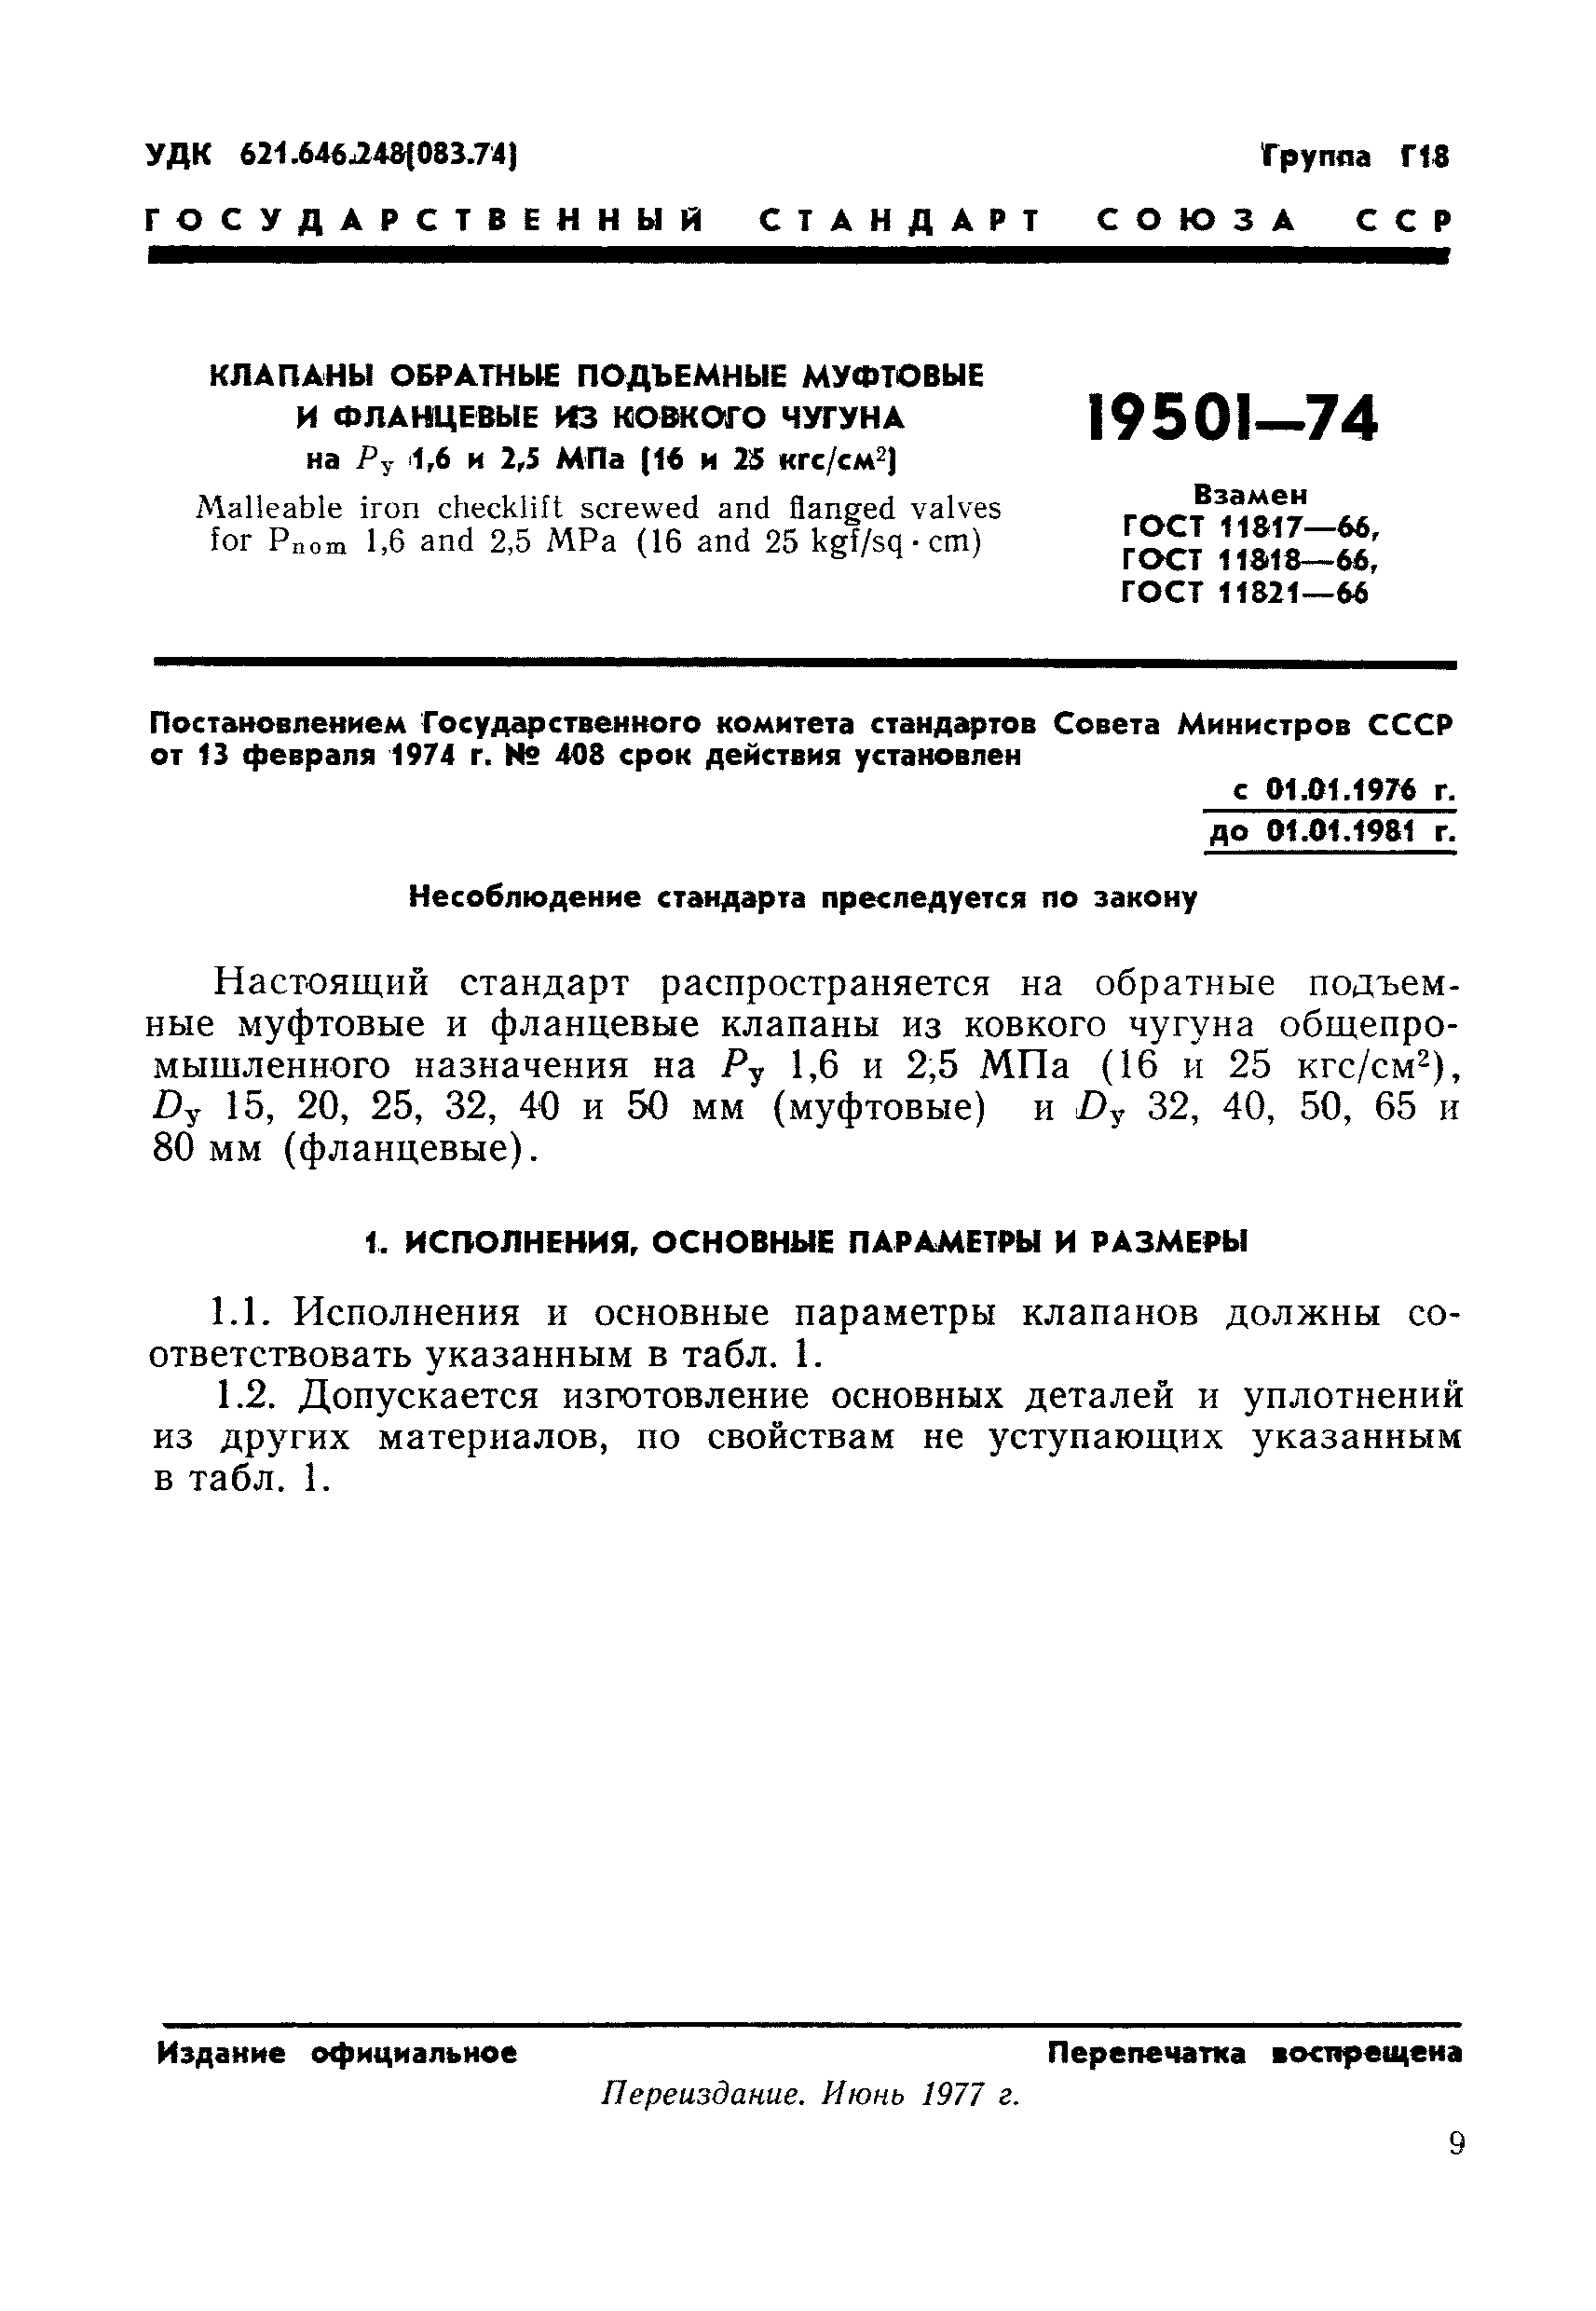 ГОСТ 19501-74